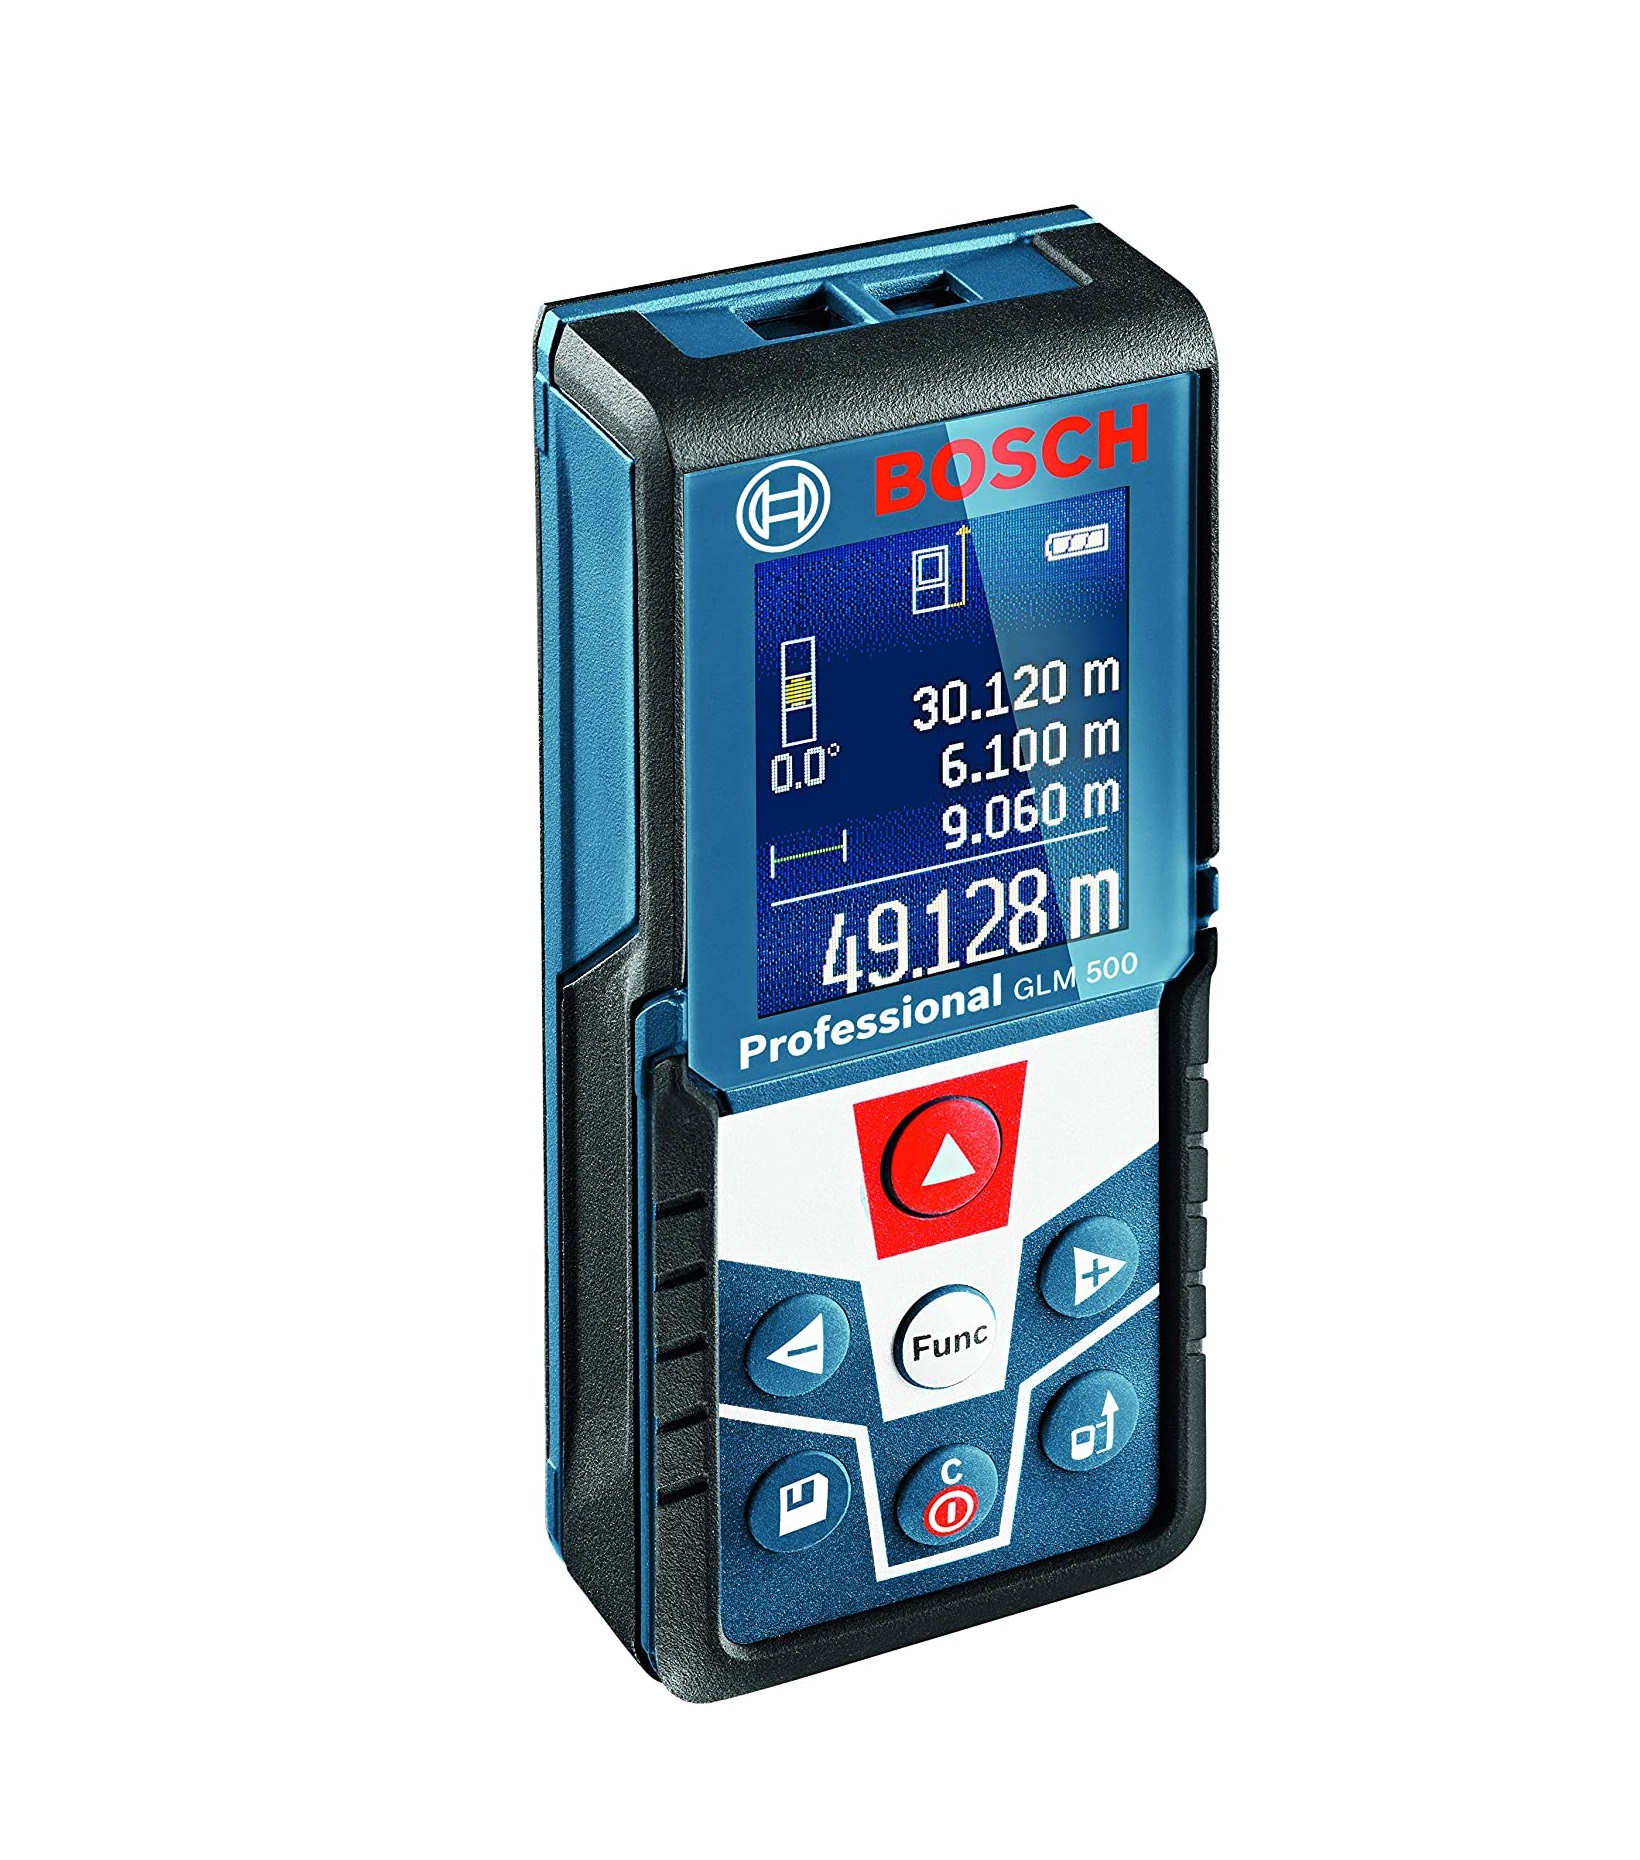 Bosch Glm 500 Laser Distance Measurement Device